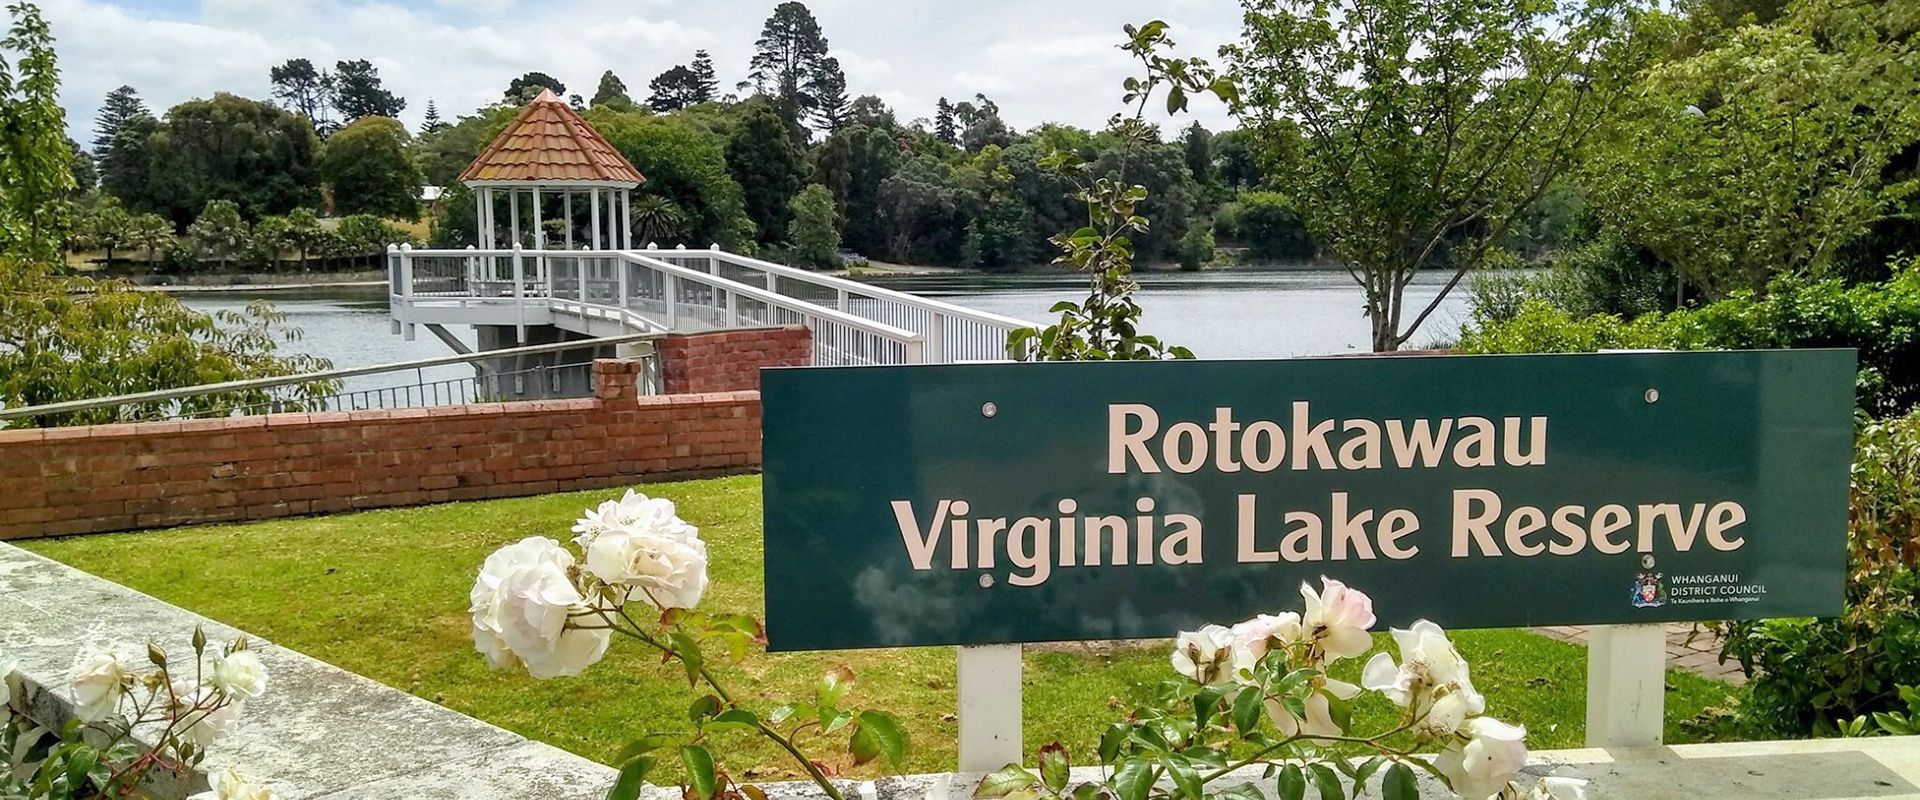 Rotokawau Virginia Lake Reserve